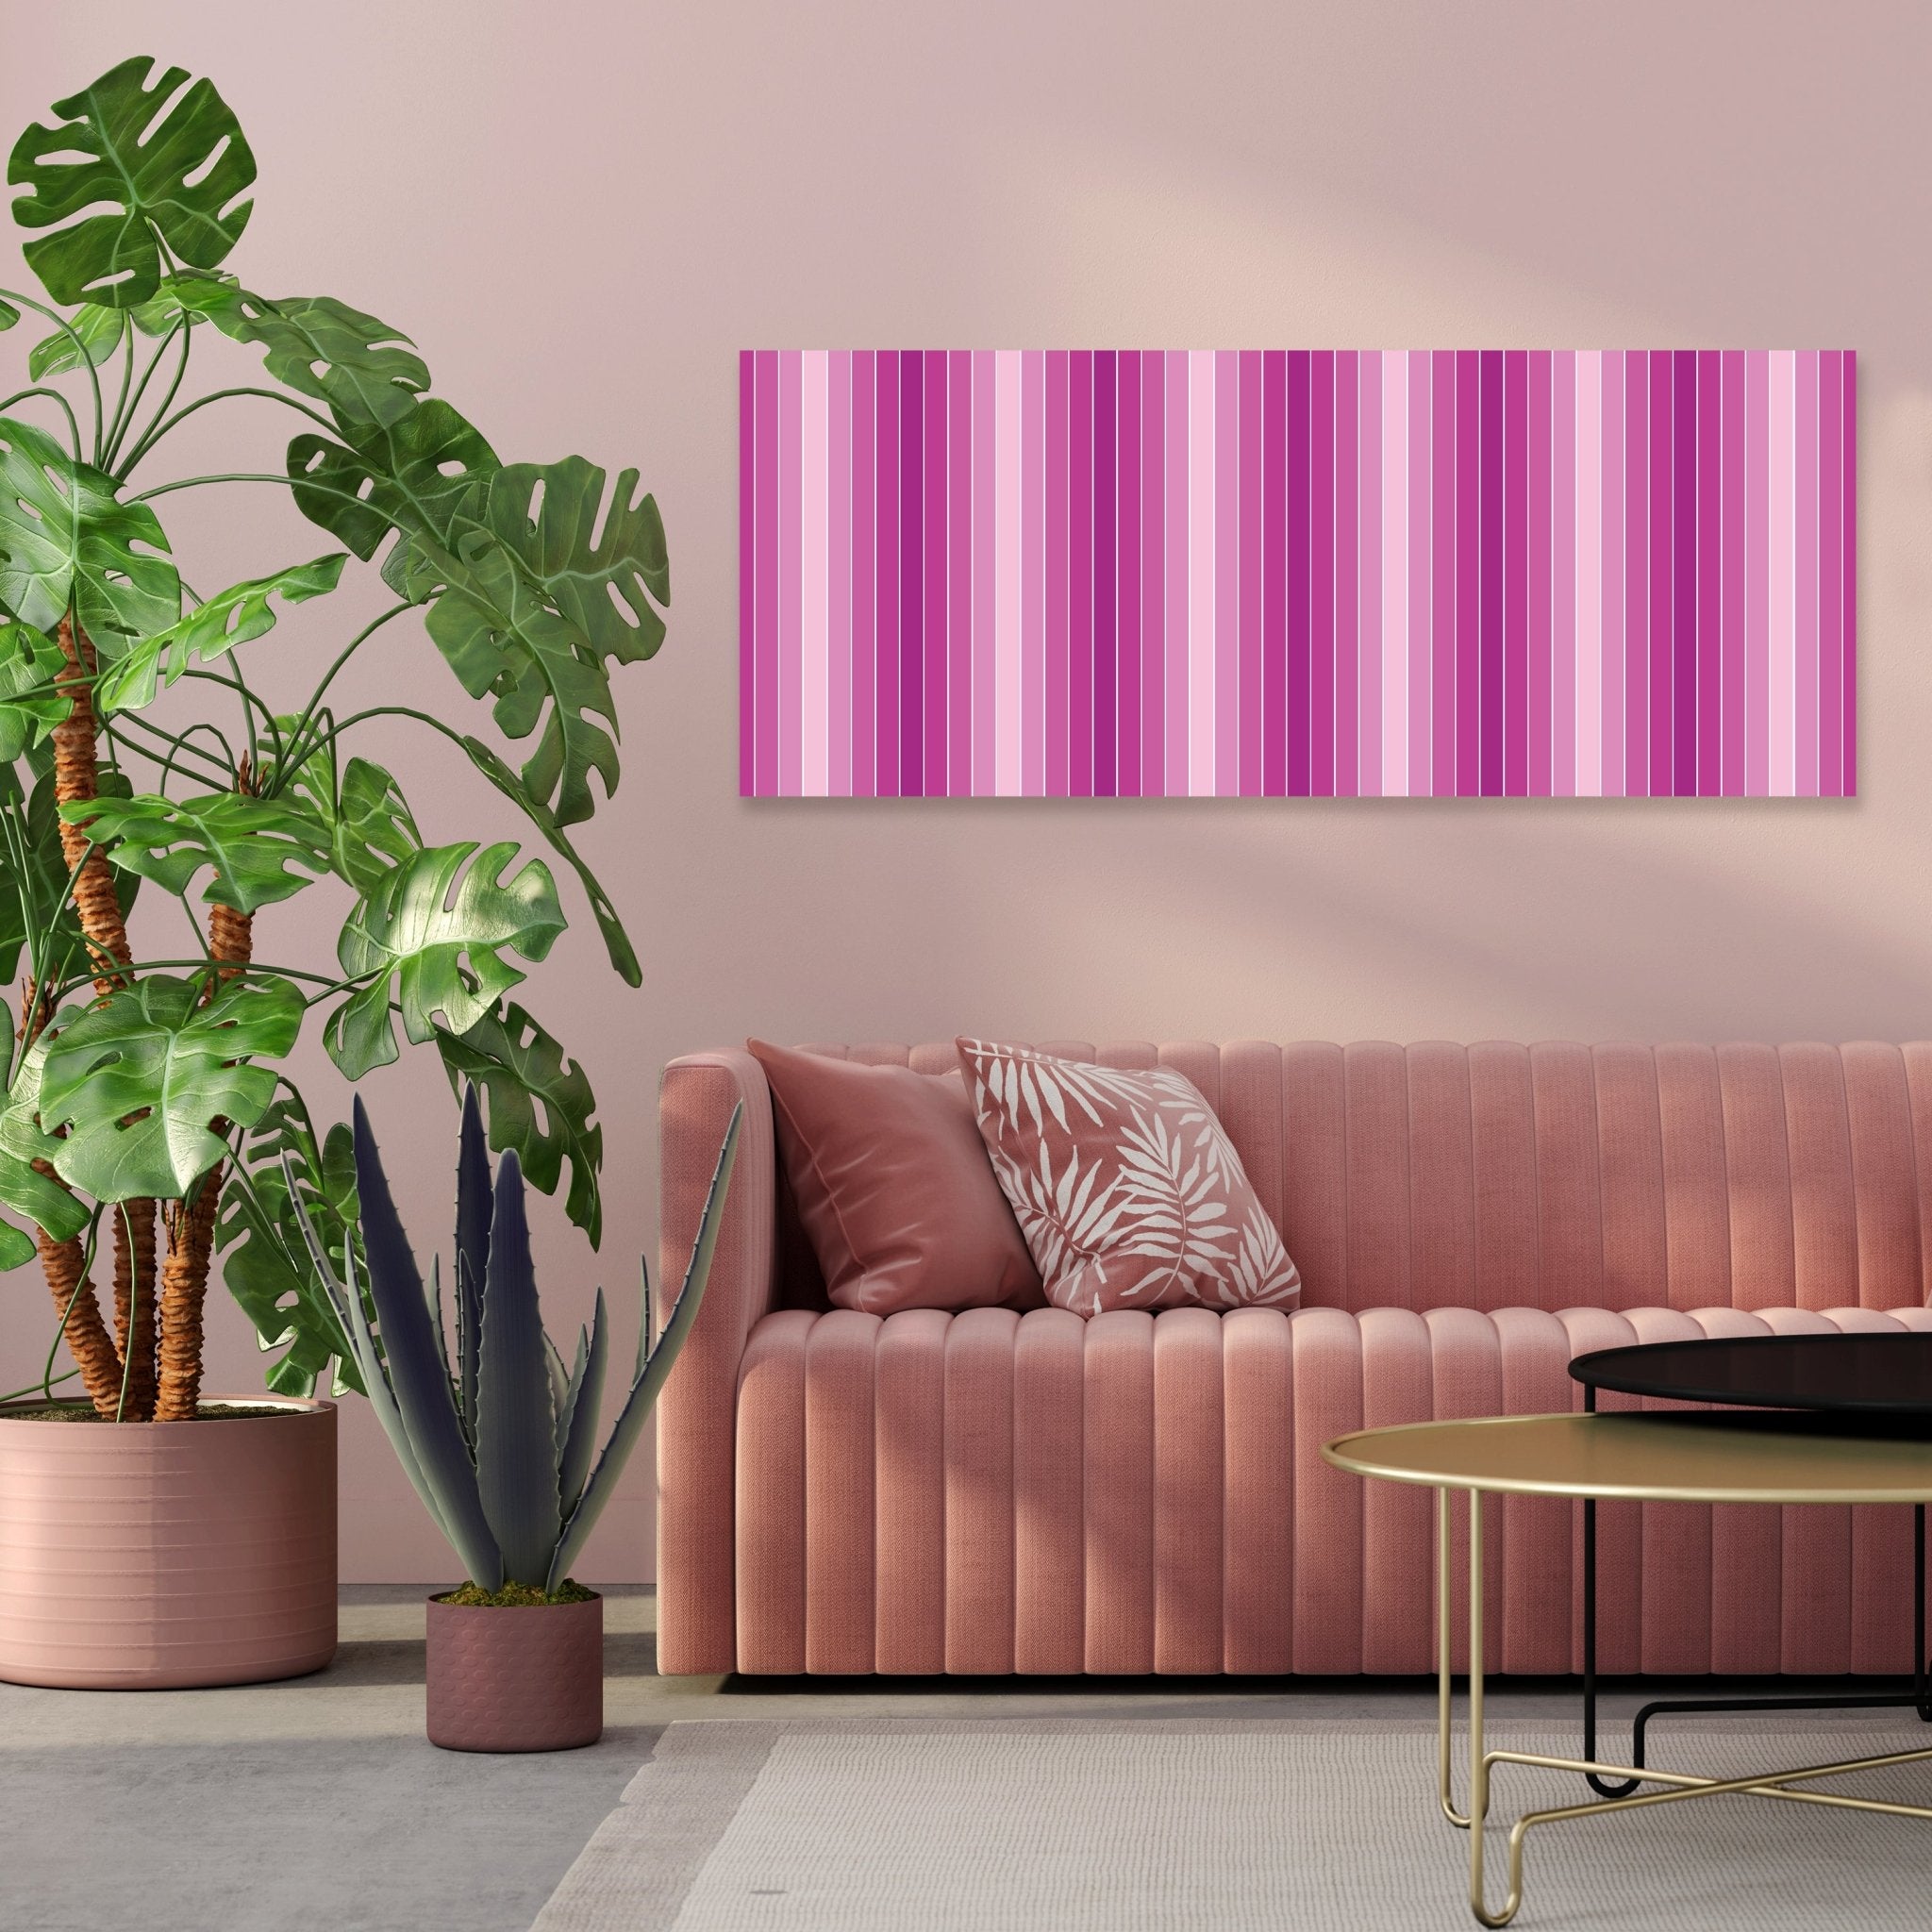 Leinwandbild Pink Muster M0096 kaufen - Bild 3